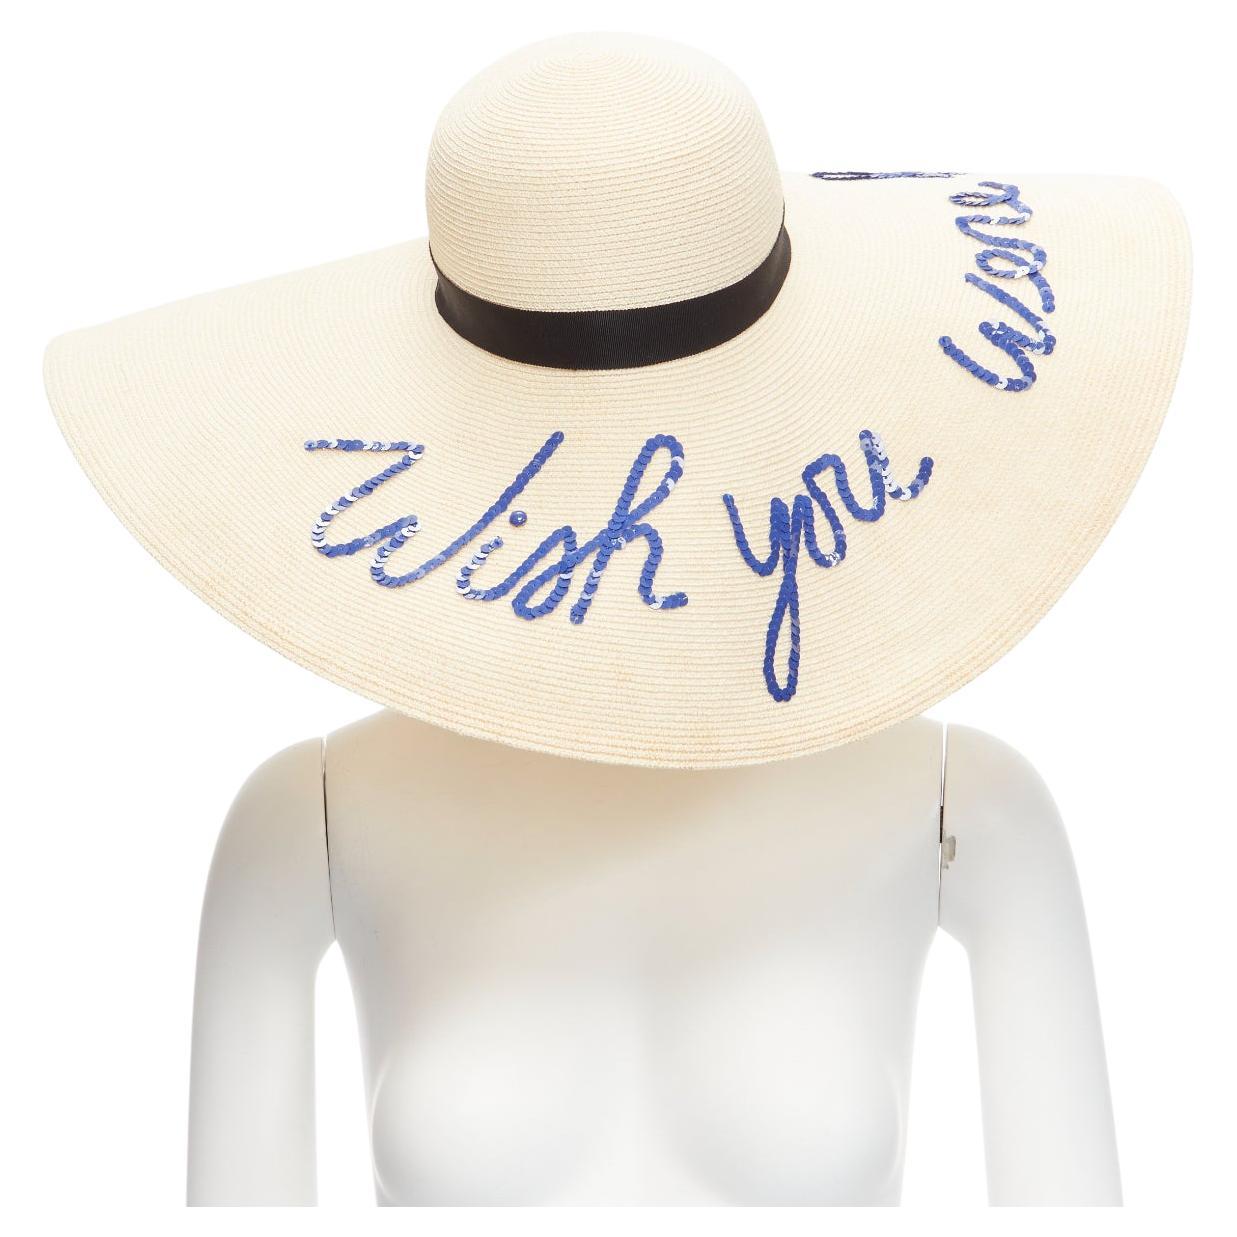 EUGENIA KIM blue sequins Wish You Were Here beige toyo paper cotton sun hat